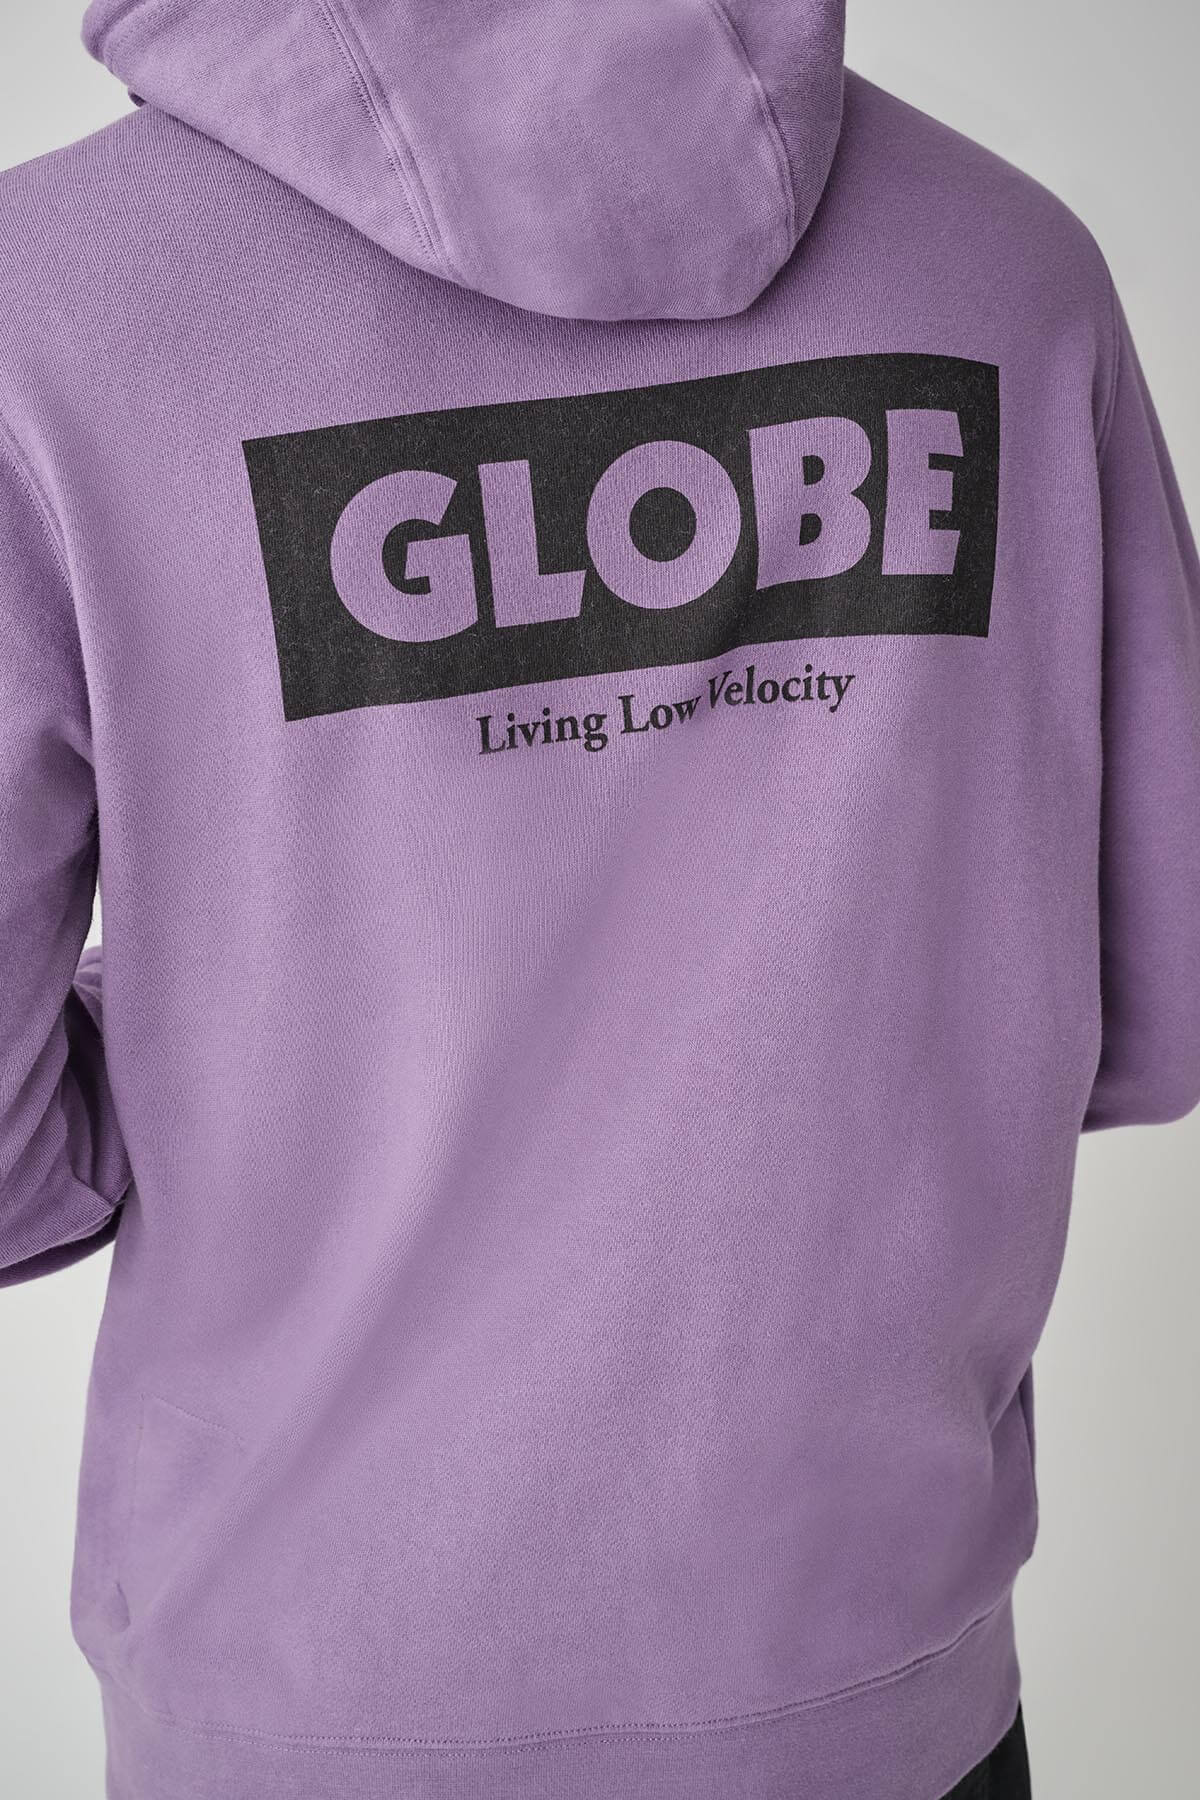 Globe FLEECE Living Low Velocity Hoodie - Berry in Berry